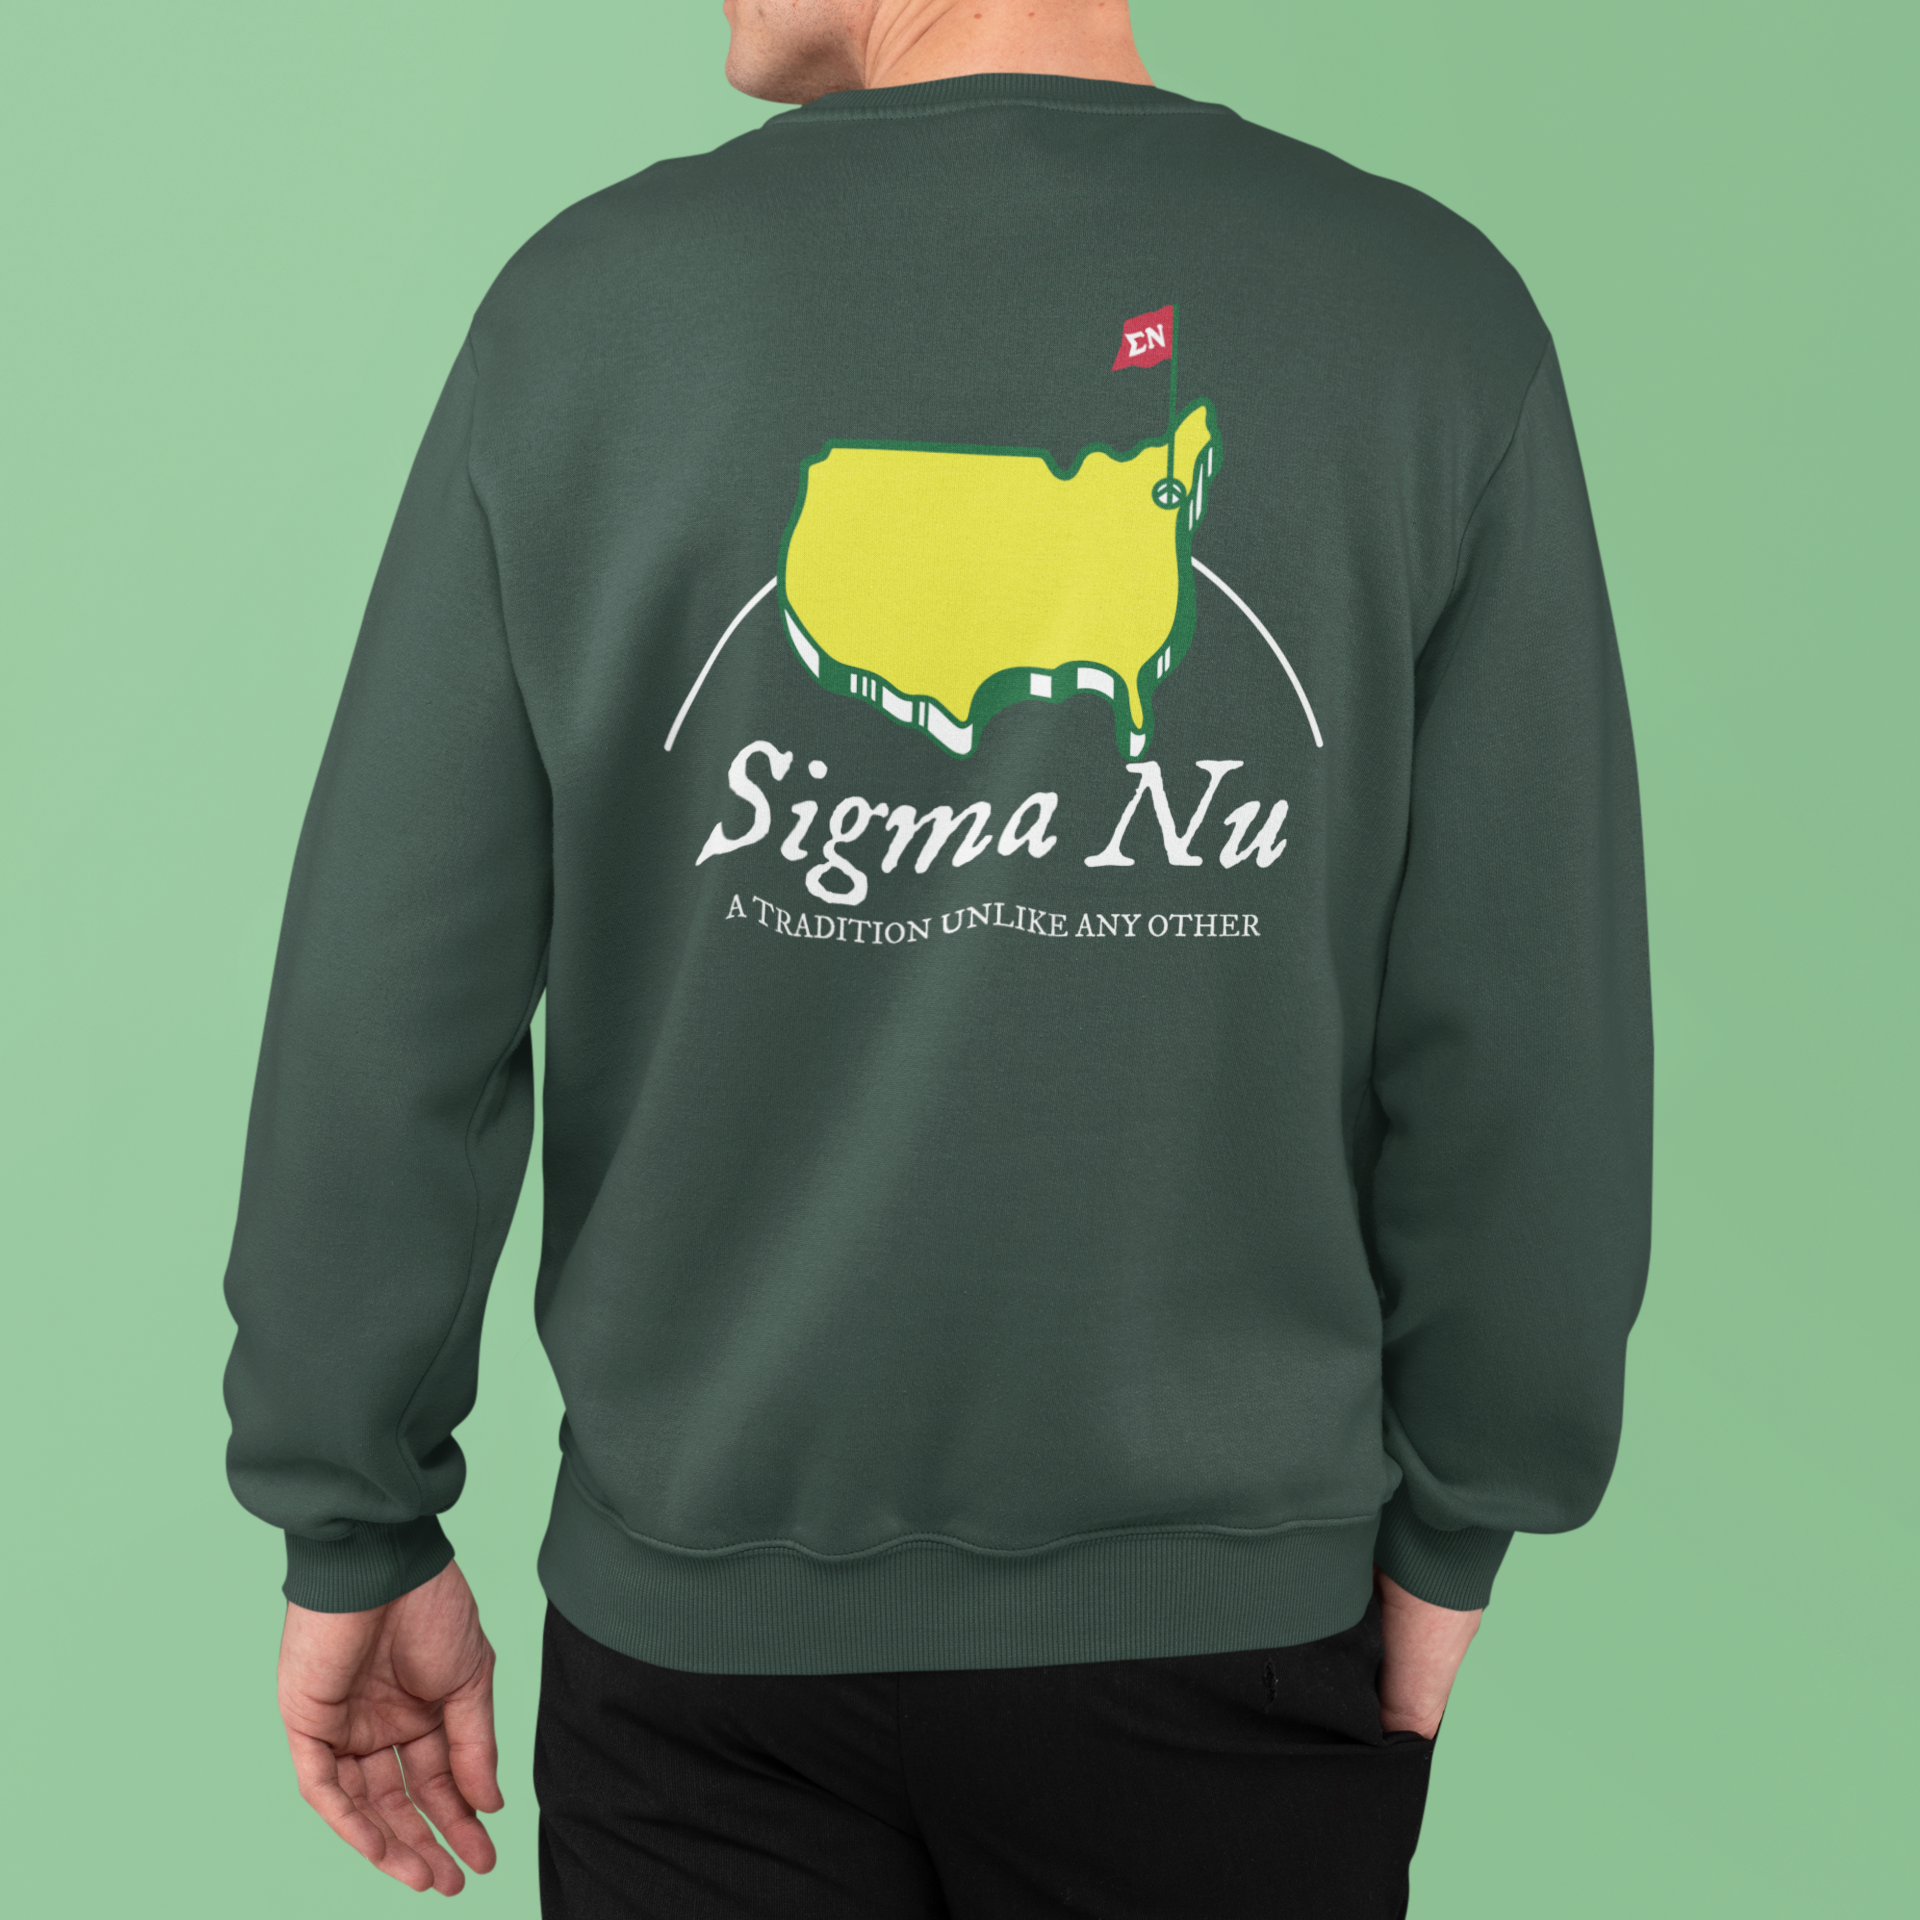 Sigma Nu Graphic Crewneck Sweatshirt | The Masters | Sigma Nu Clothing, Apparel and Merchandise back model 